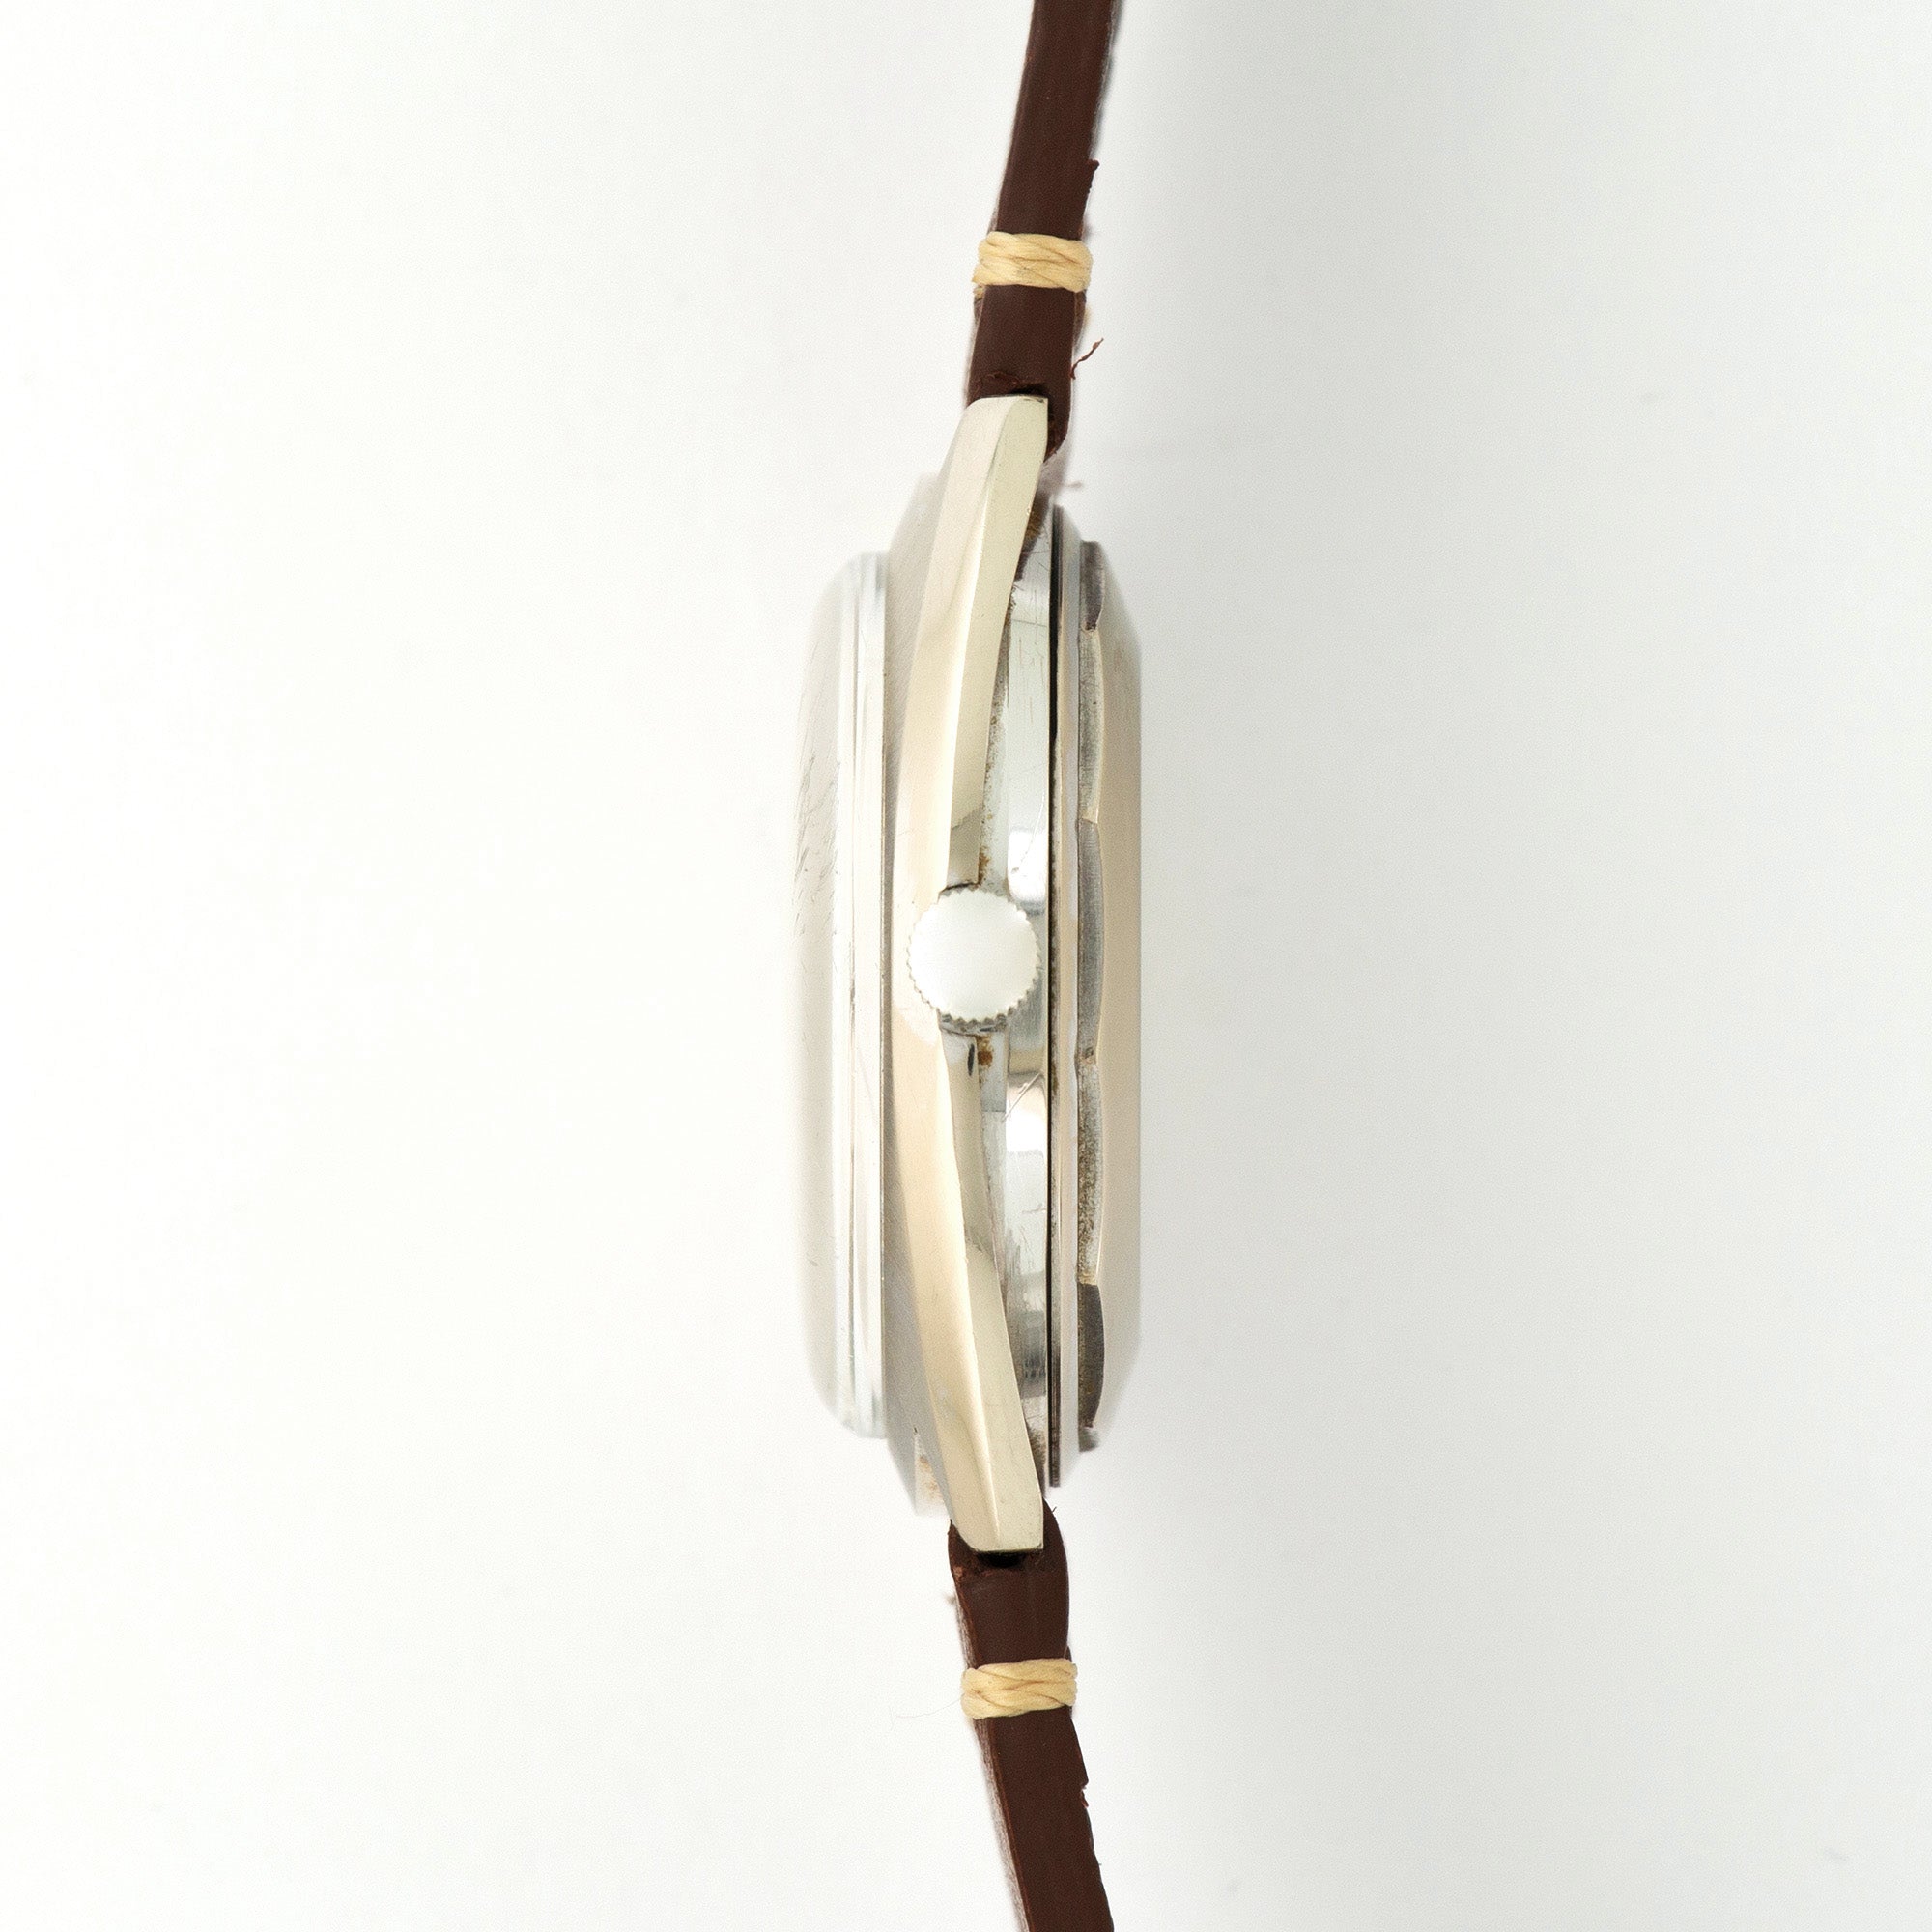 Vacheron Constantin - Vacheron Constantin White Gold Royal Chronometer Automatic Watch Ref. 7397 Retailed by Turler - The Keystone Watches